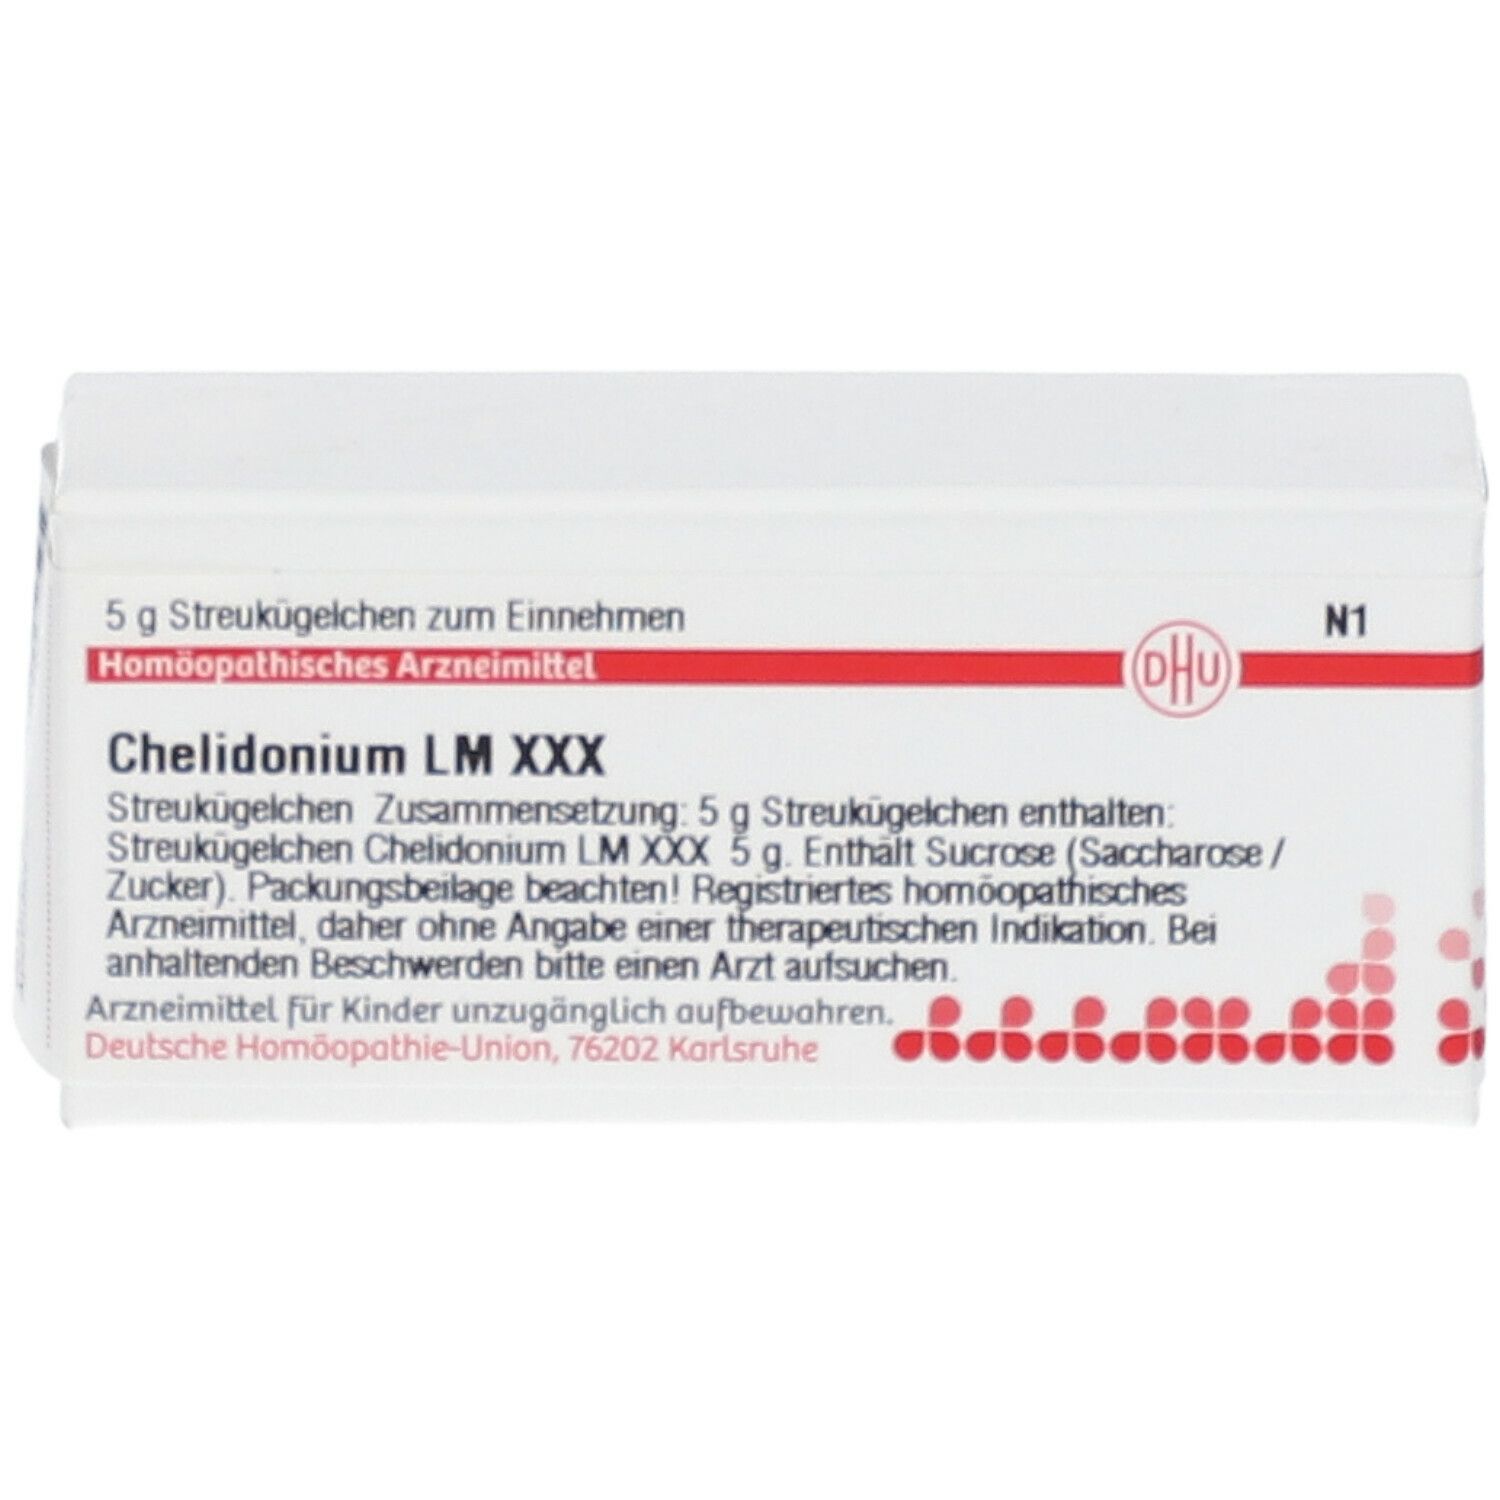 DHU Chelidonium LM XXX